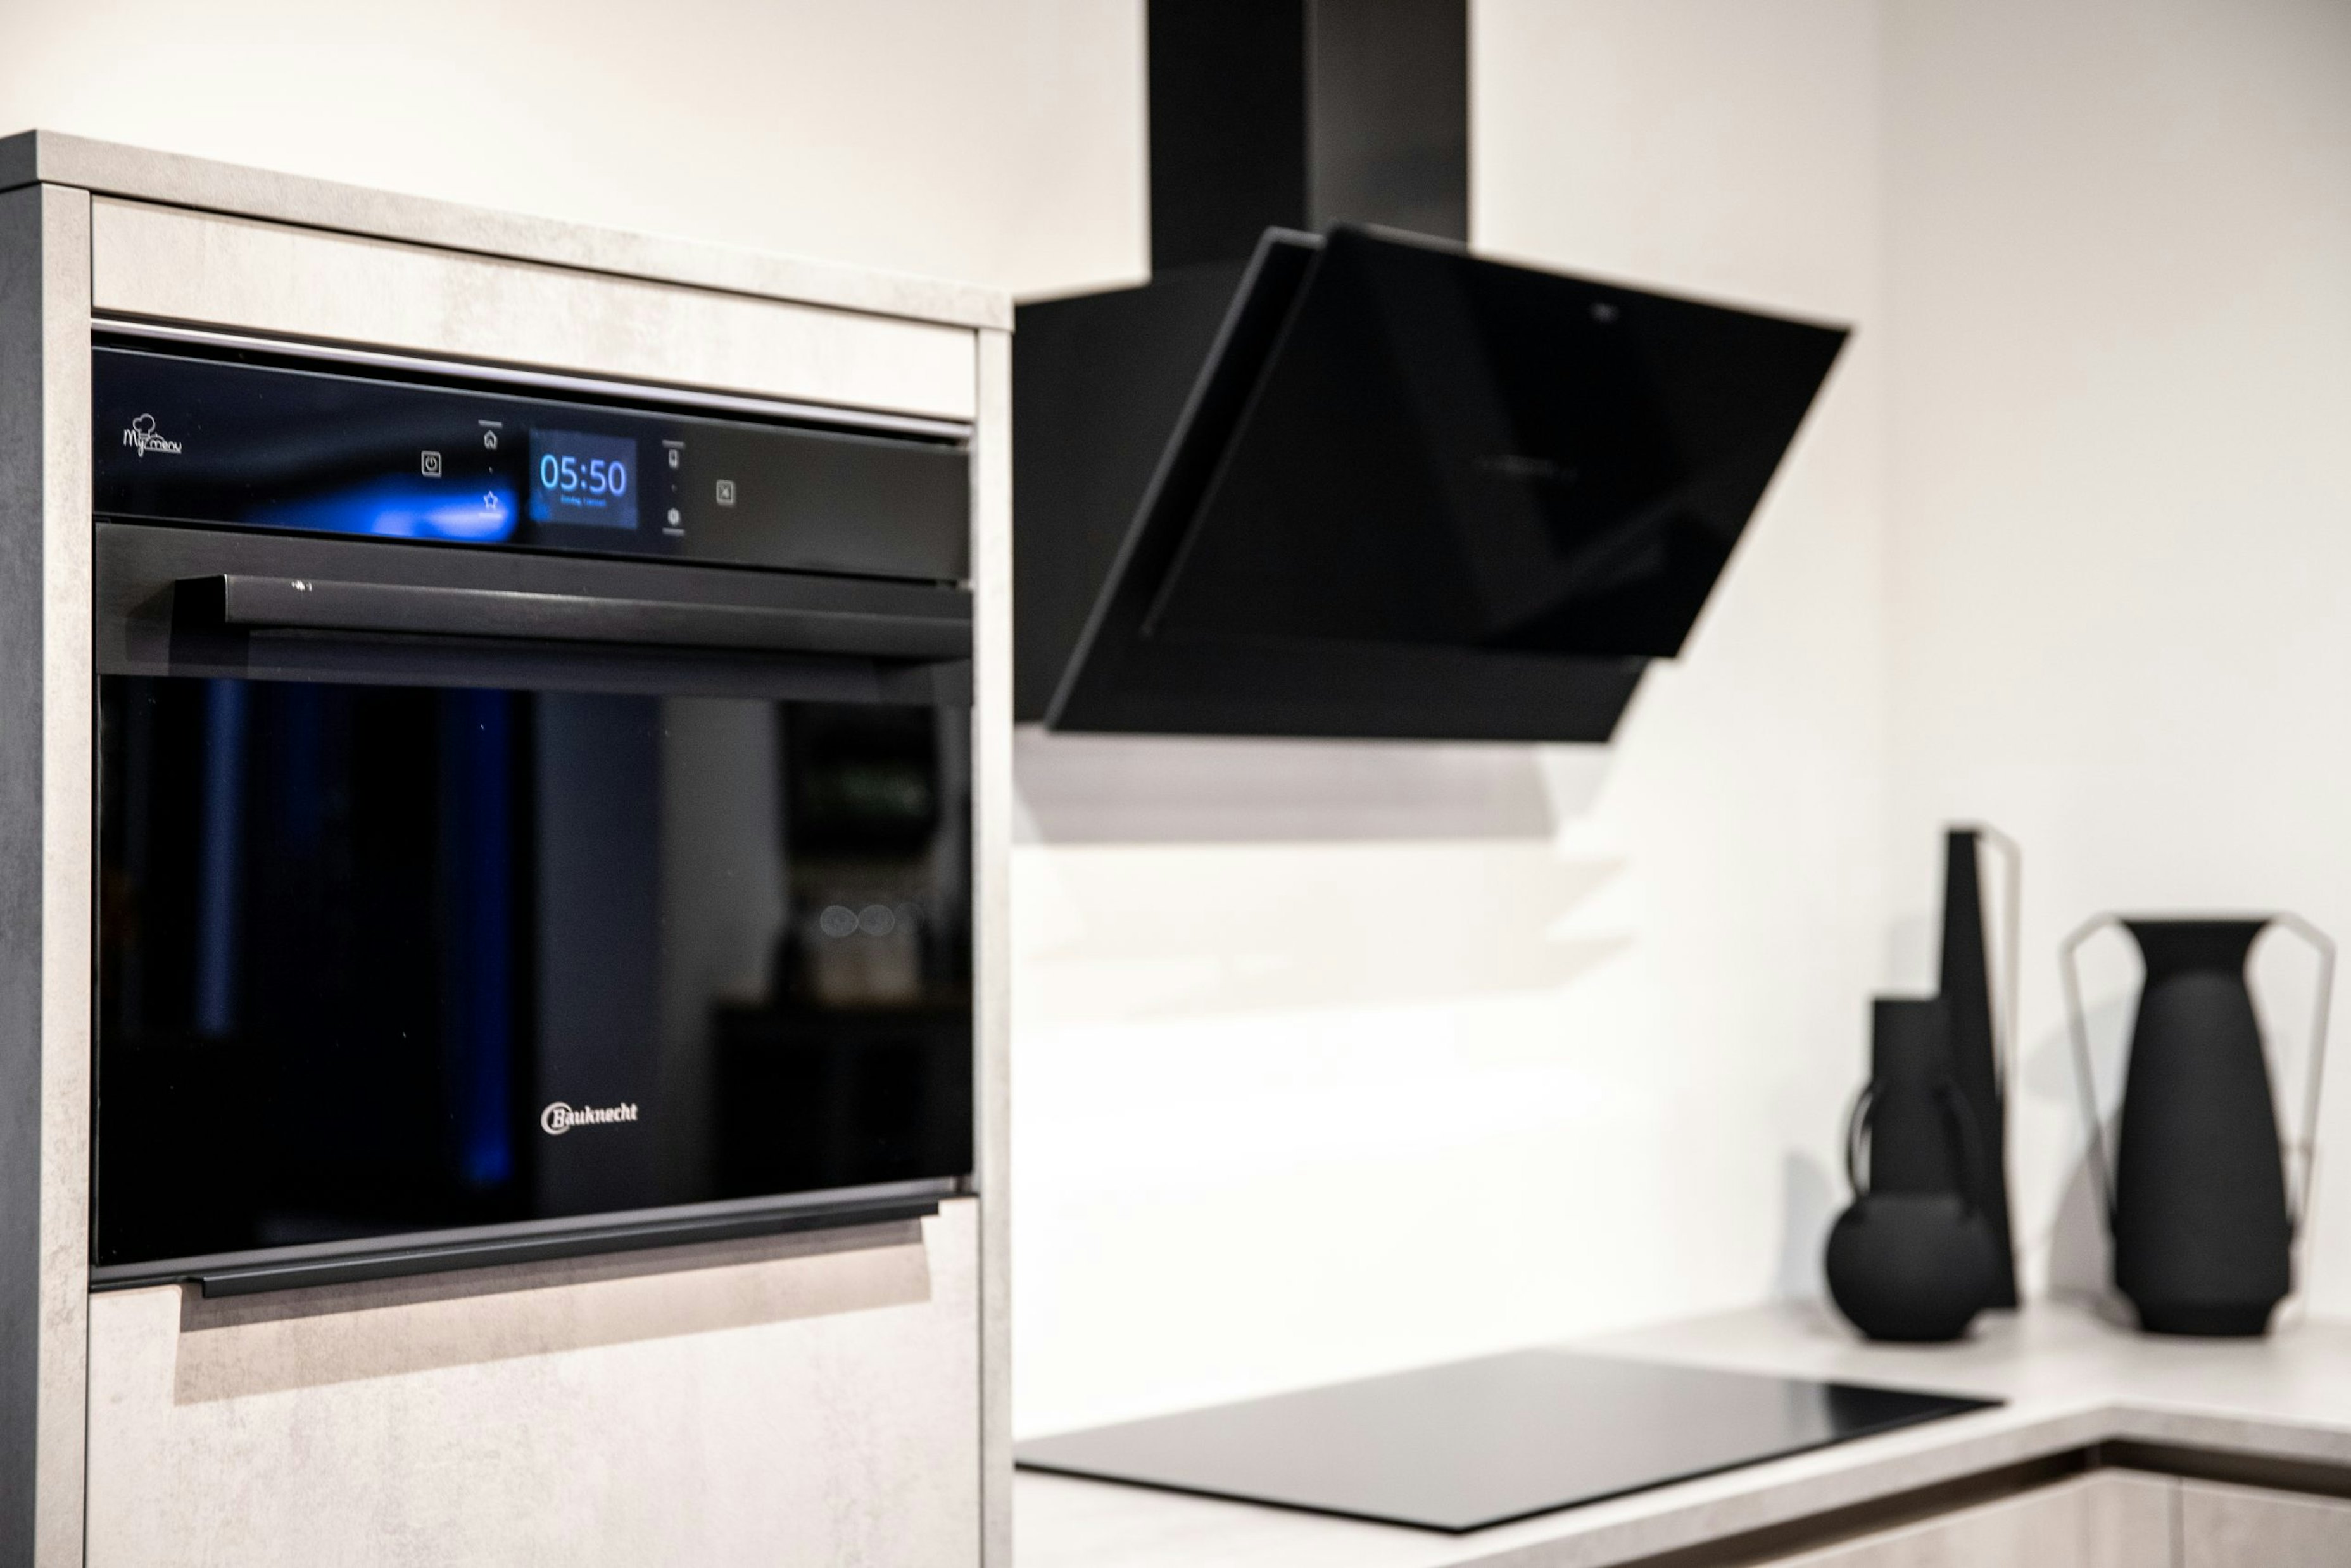 De mat zwarte Bauknecht oven pas goed binnen de industriële look - Bemmel & Kroon keukens